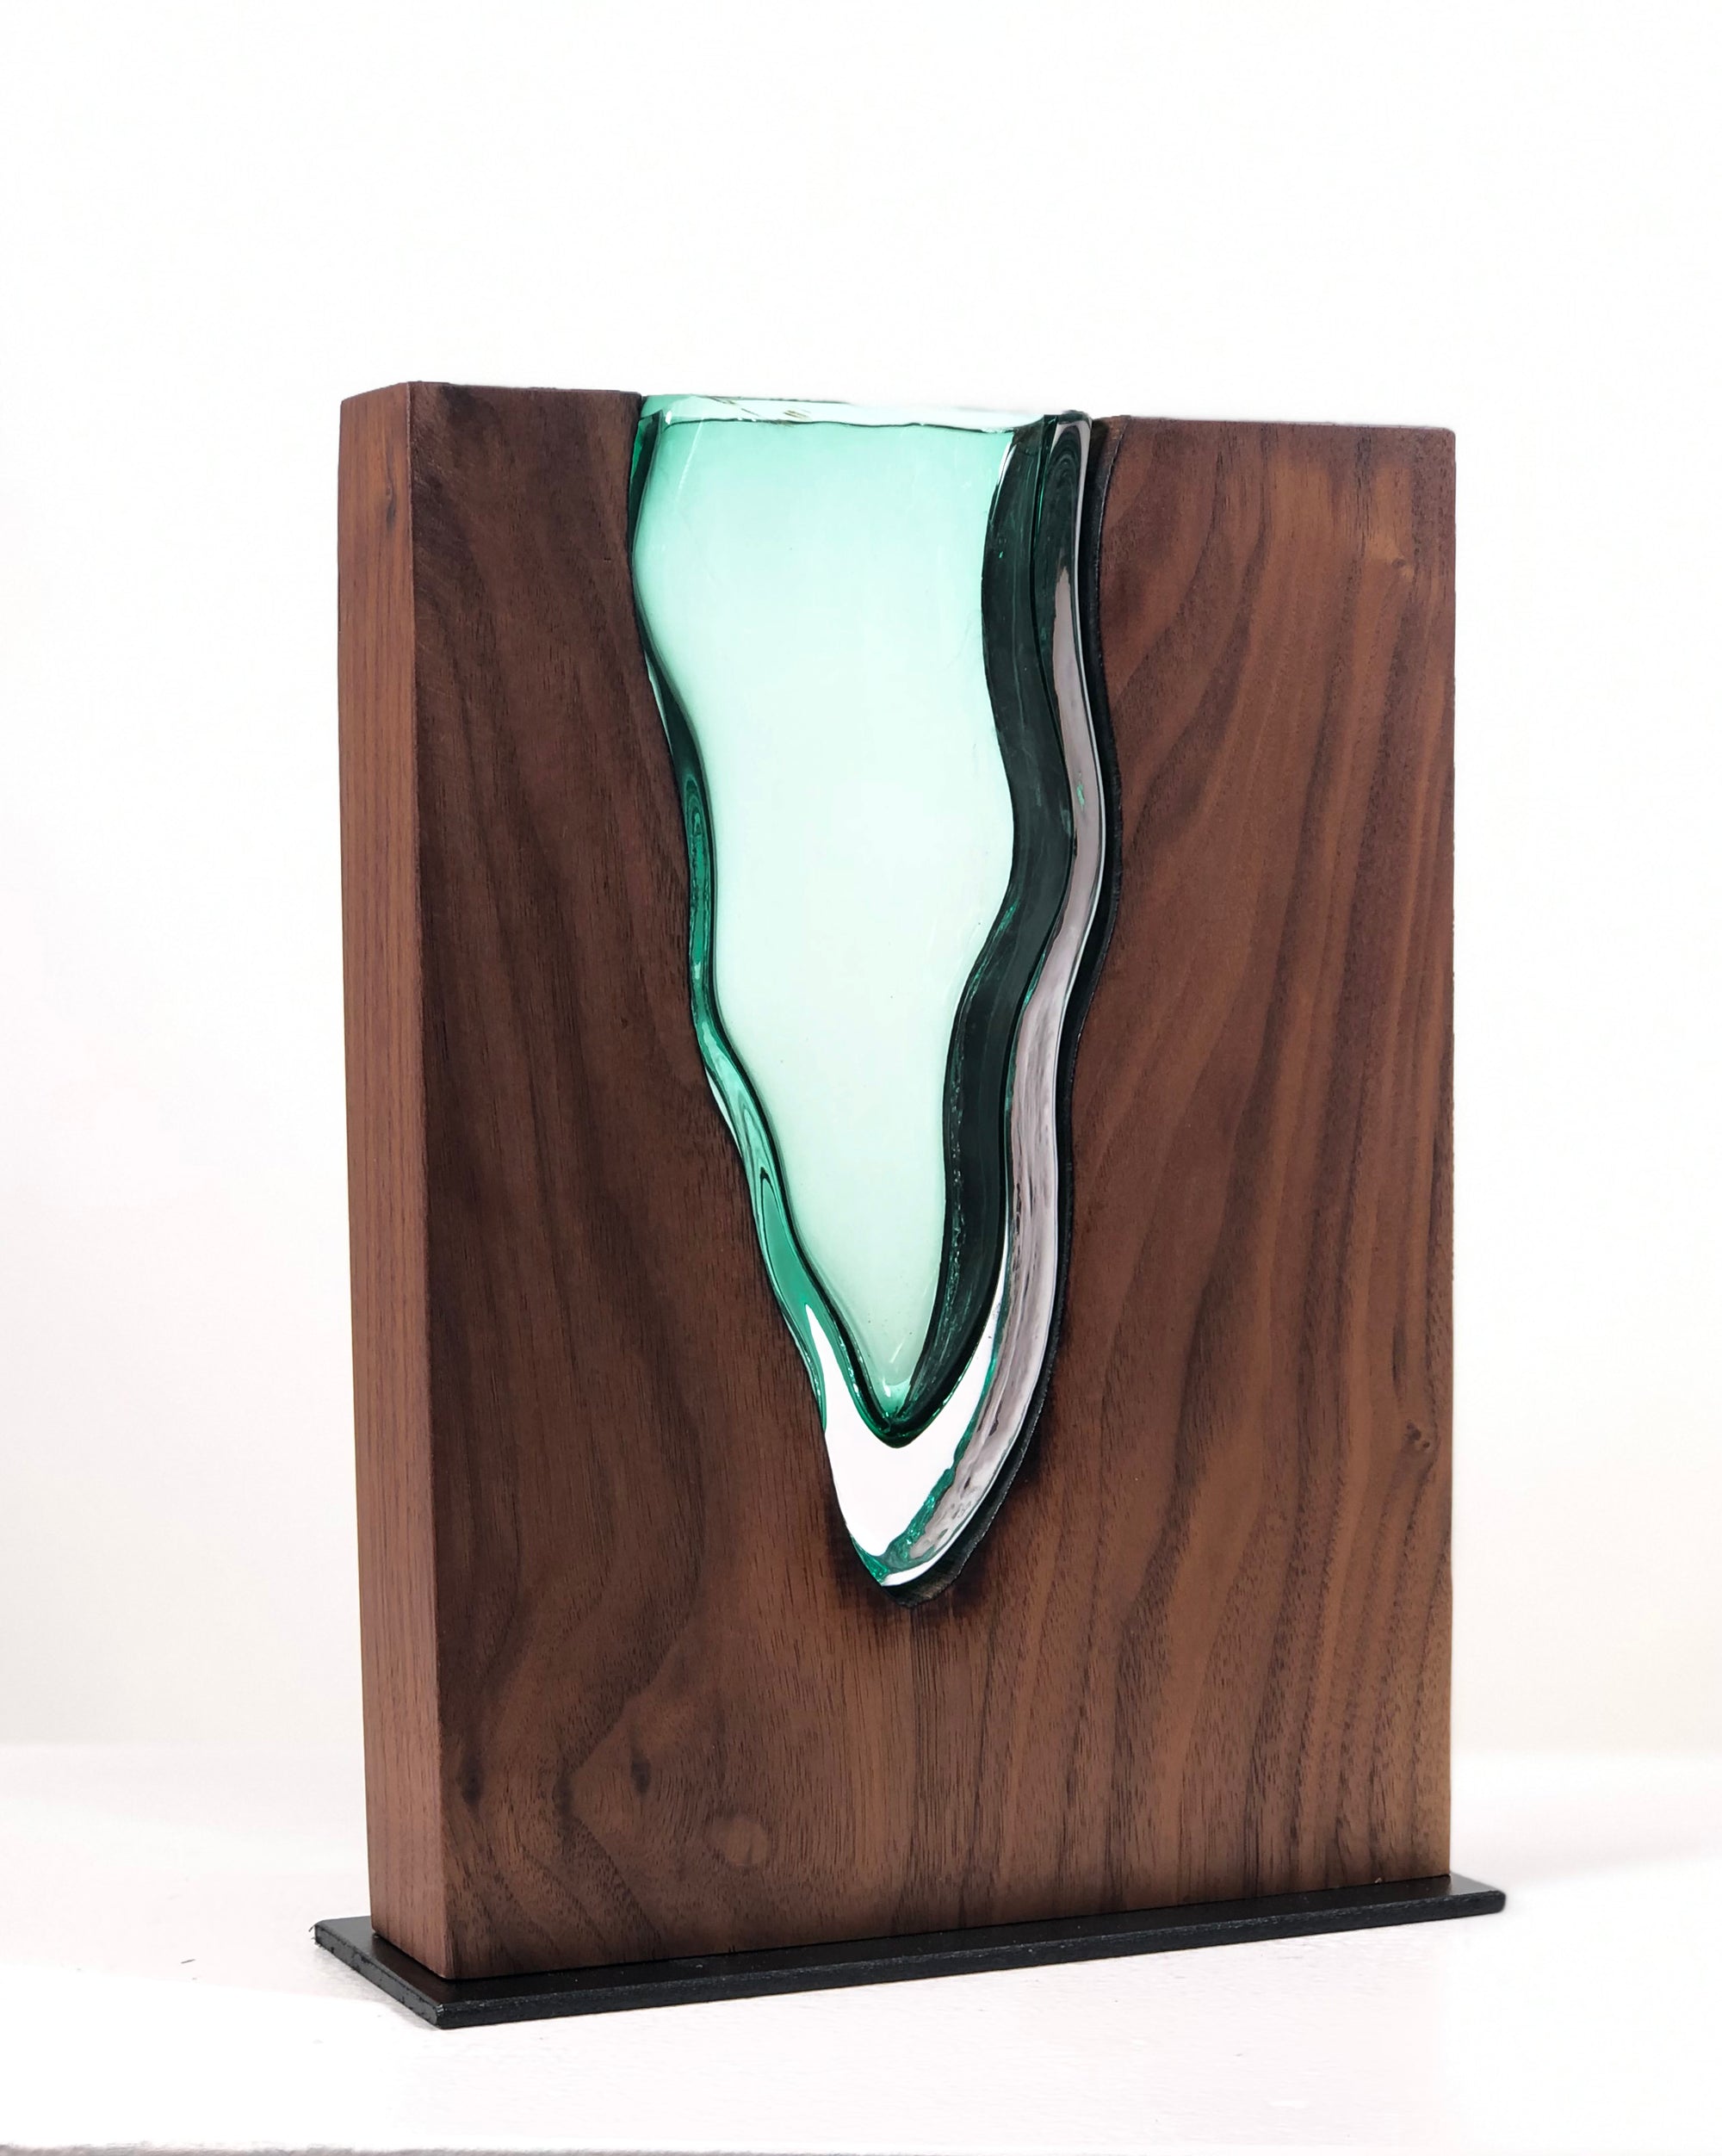 Clean Cut Walnut Wood with Hand Blown Emerald Glass "Lake"